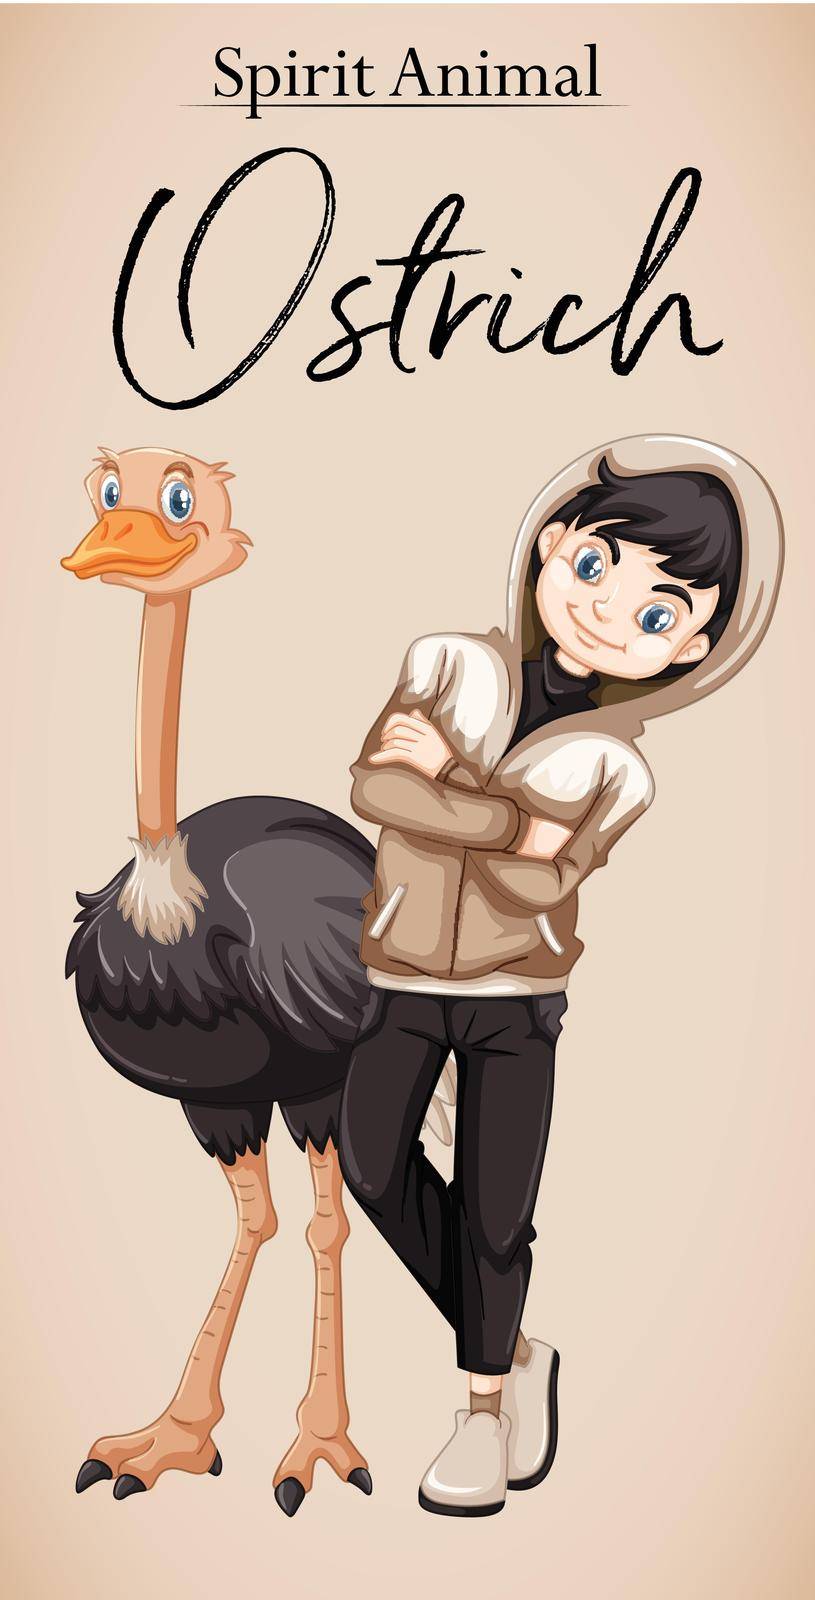 A spirit animal ostrich illustration